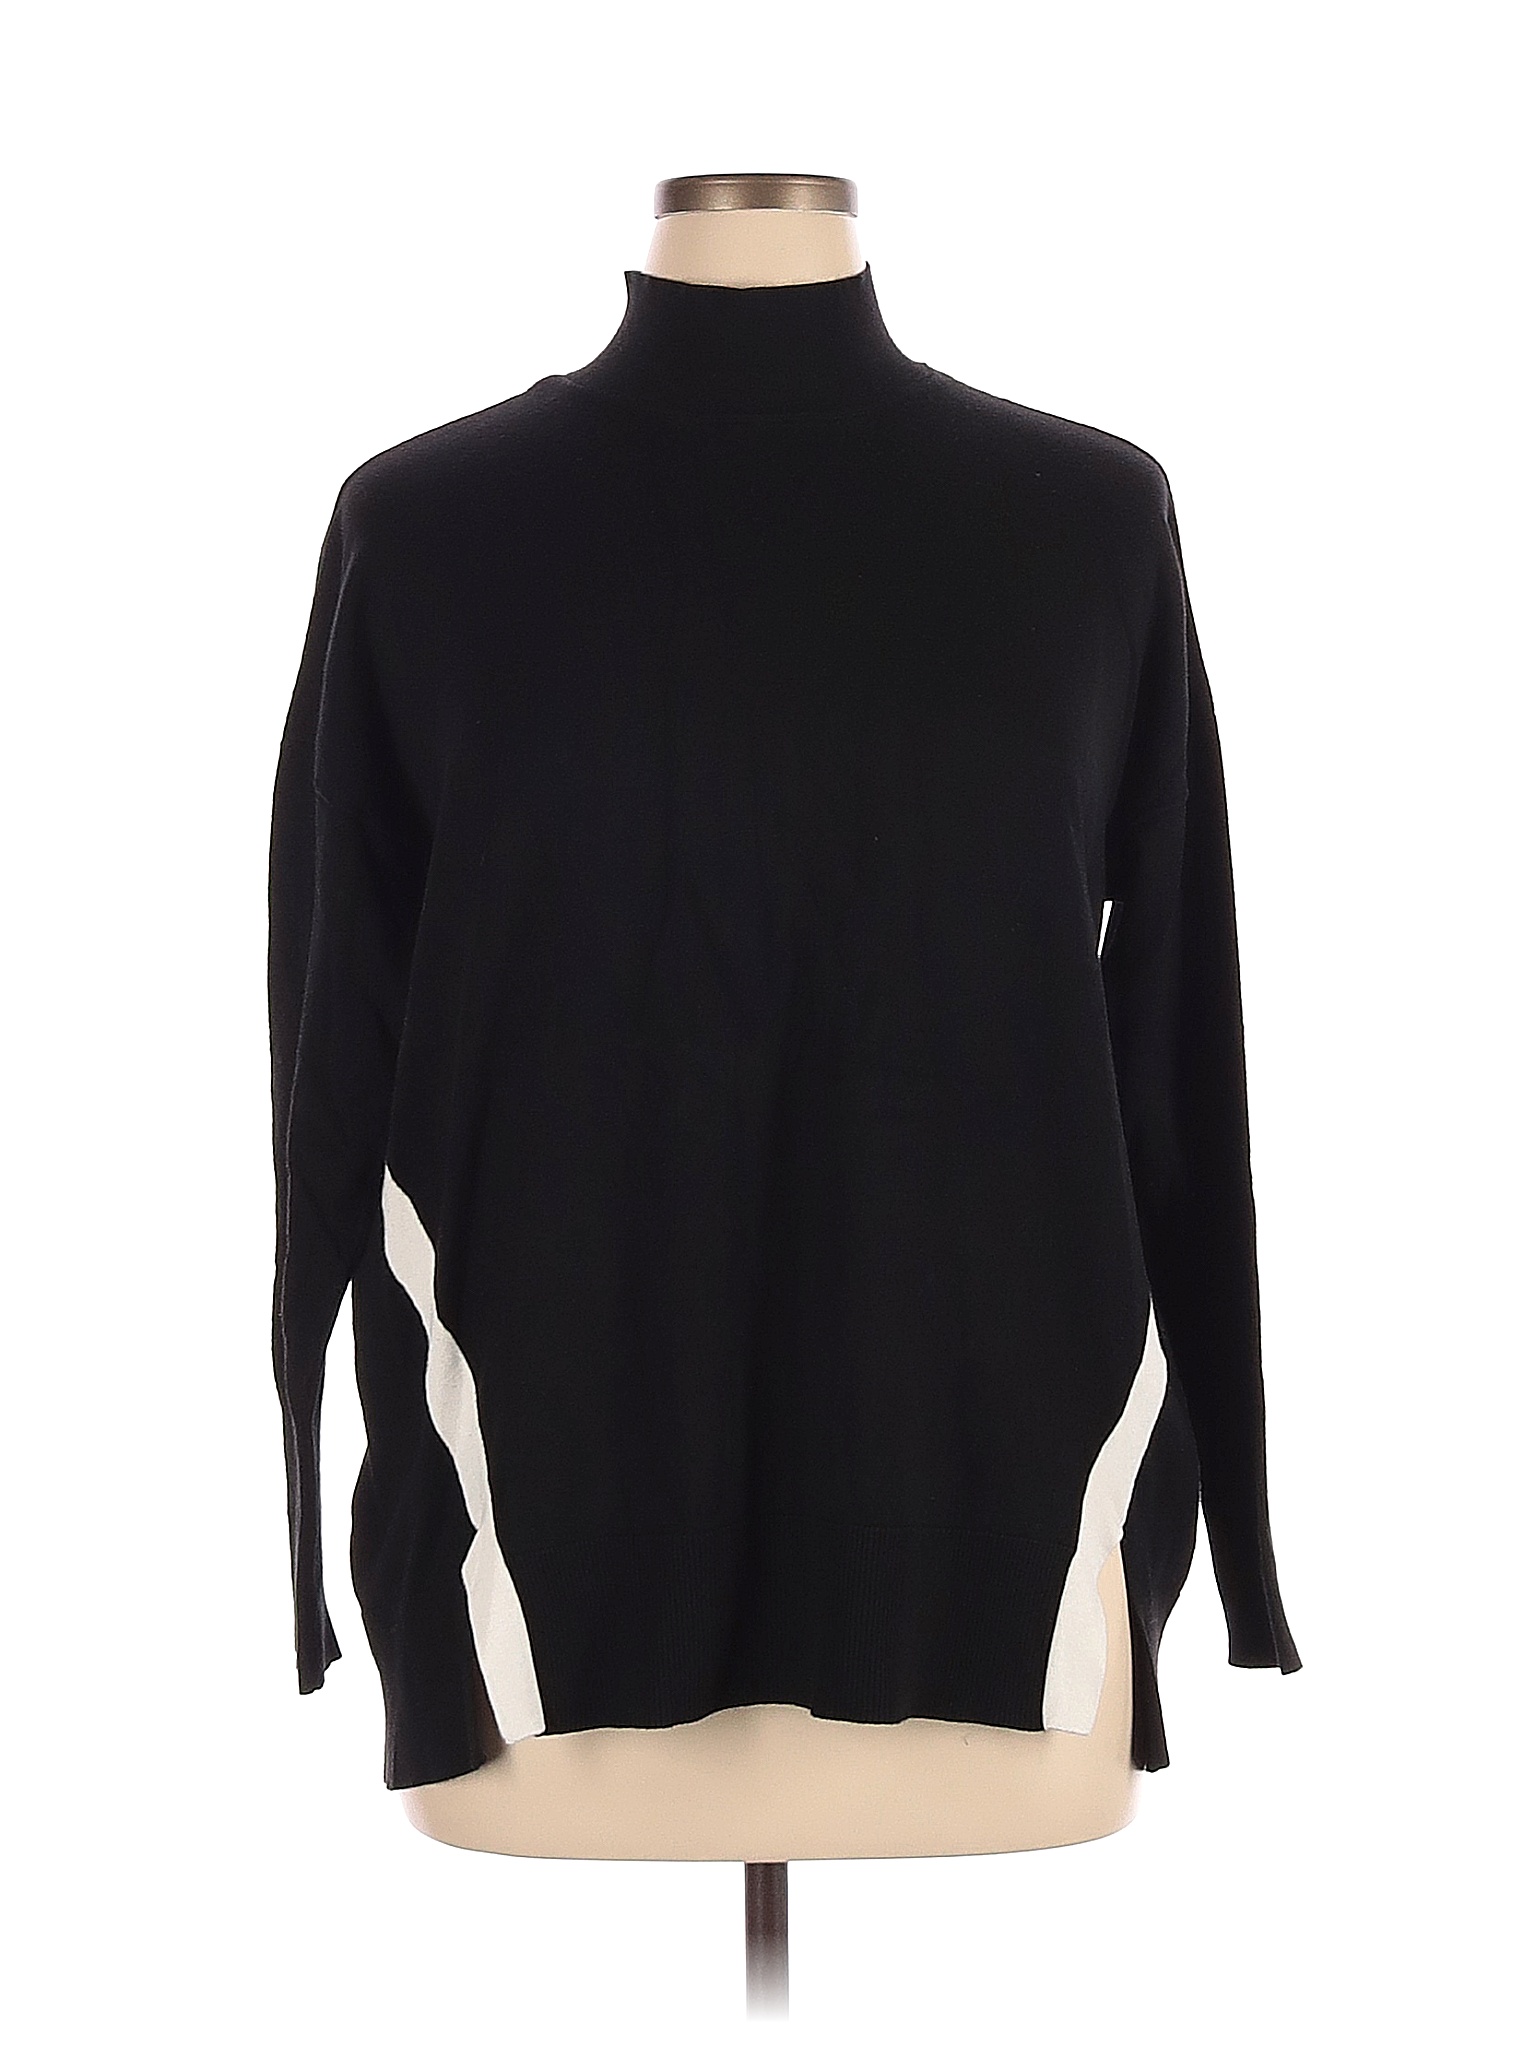 Lane Bryant Solid Black Turtleneck Sweater Size 18 (Plus) - 69% off ...